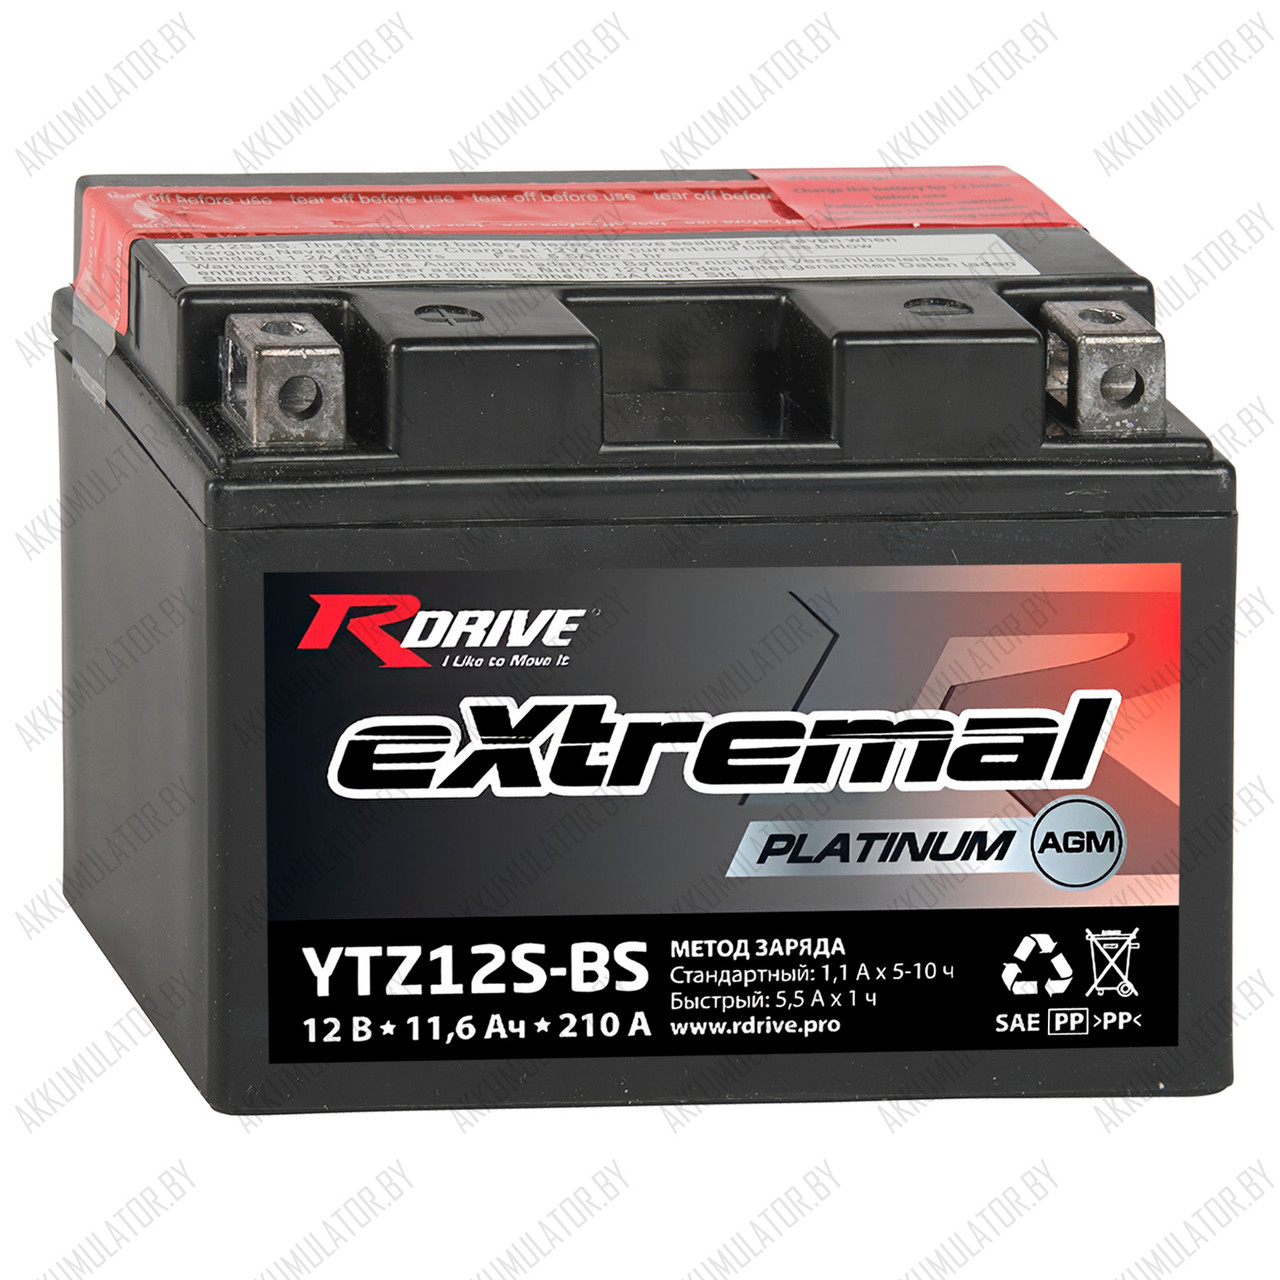 RDrive eXtremal Platinum YTZ12S-BS / 11,6Ah